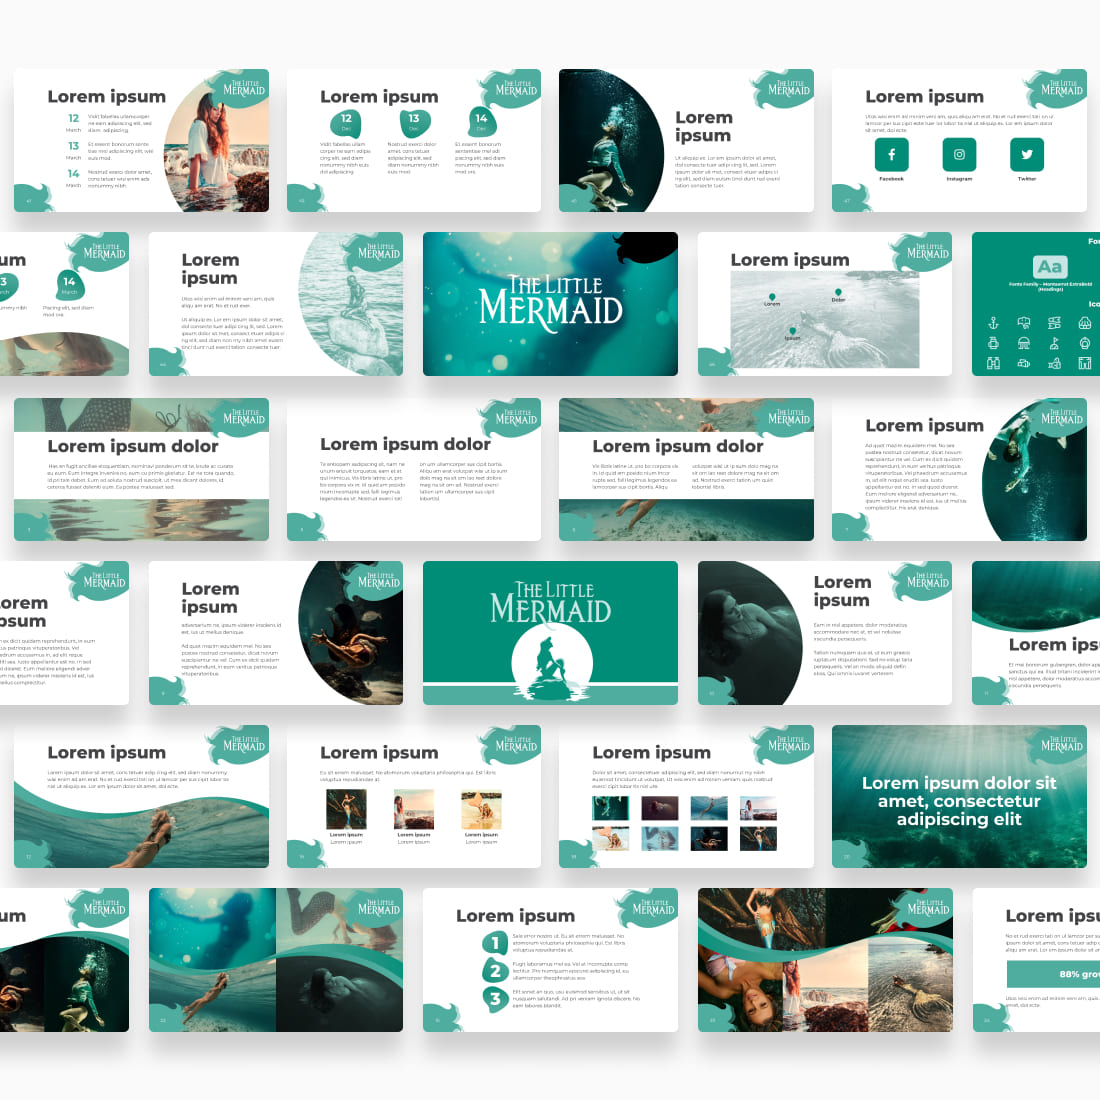 Mermaid Disney Presentation: 50 Slides PPTX, KEY, Google Slides cover image.